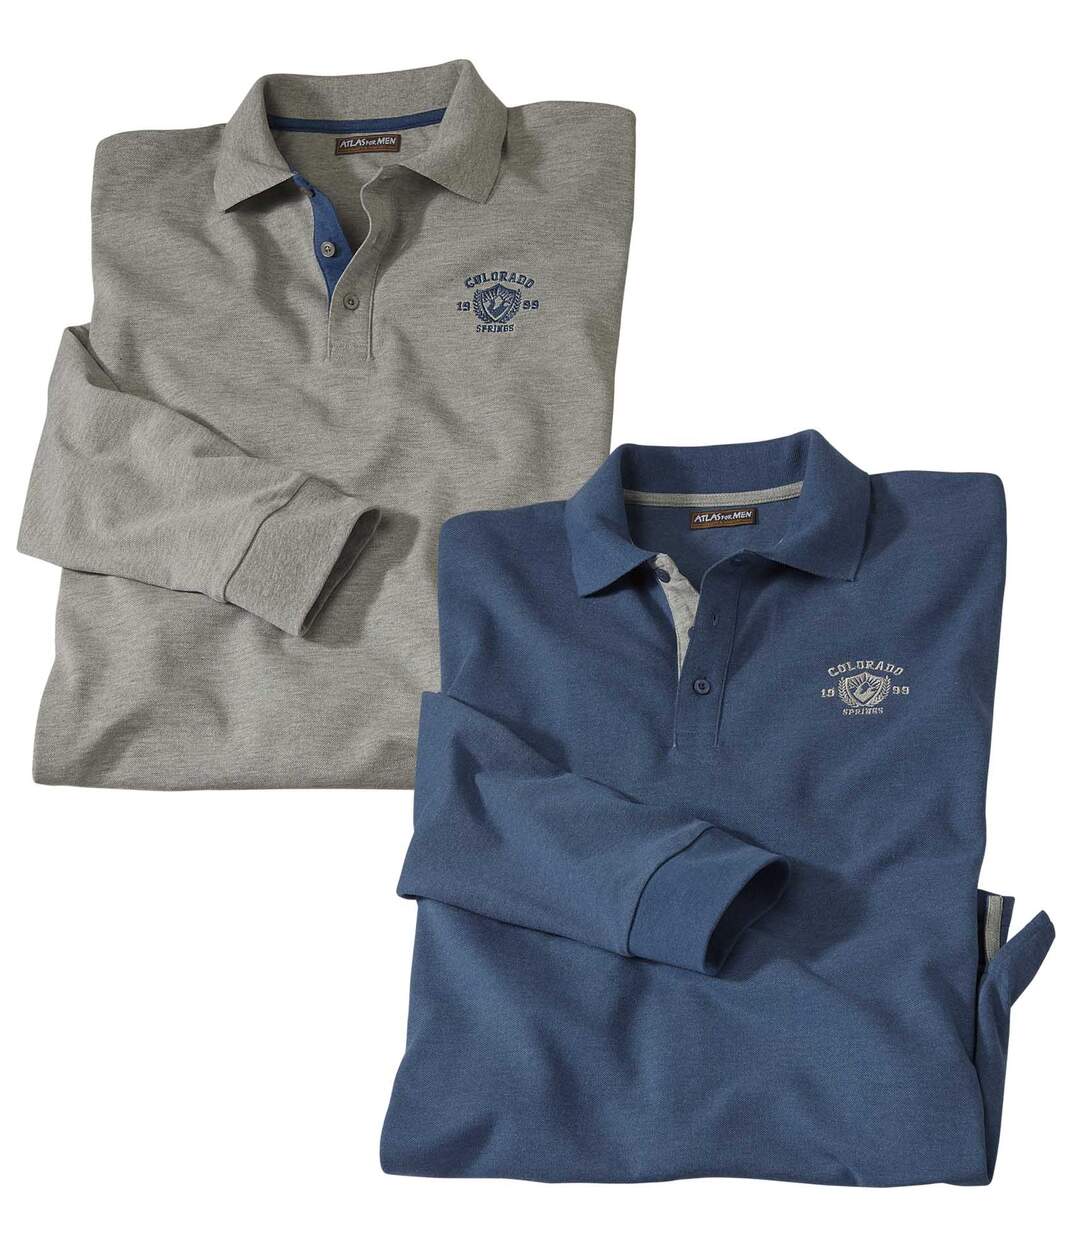 Pack of 2 Men's Long Sleeve Piqué Polo Shirts - Mottled Blue and Gray Atlas For Men